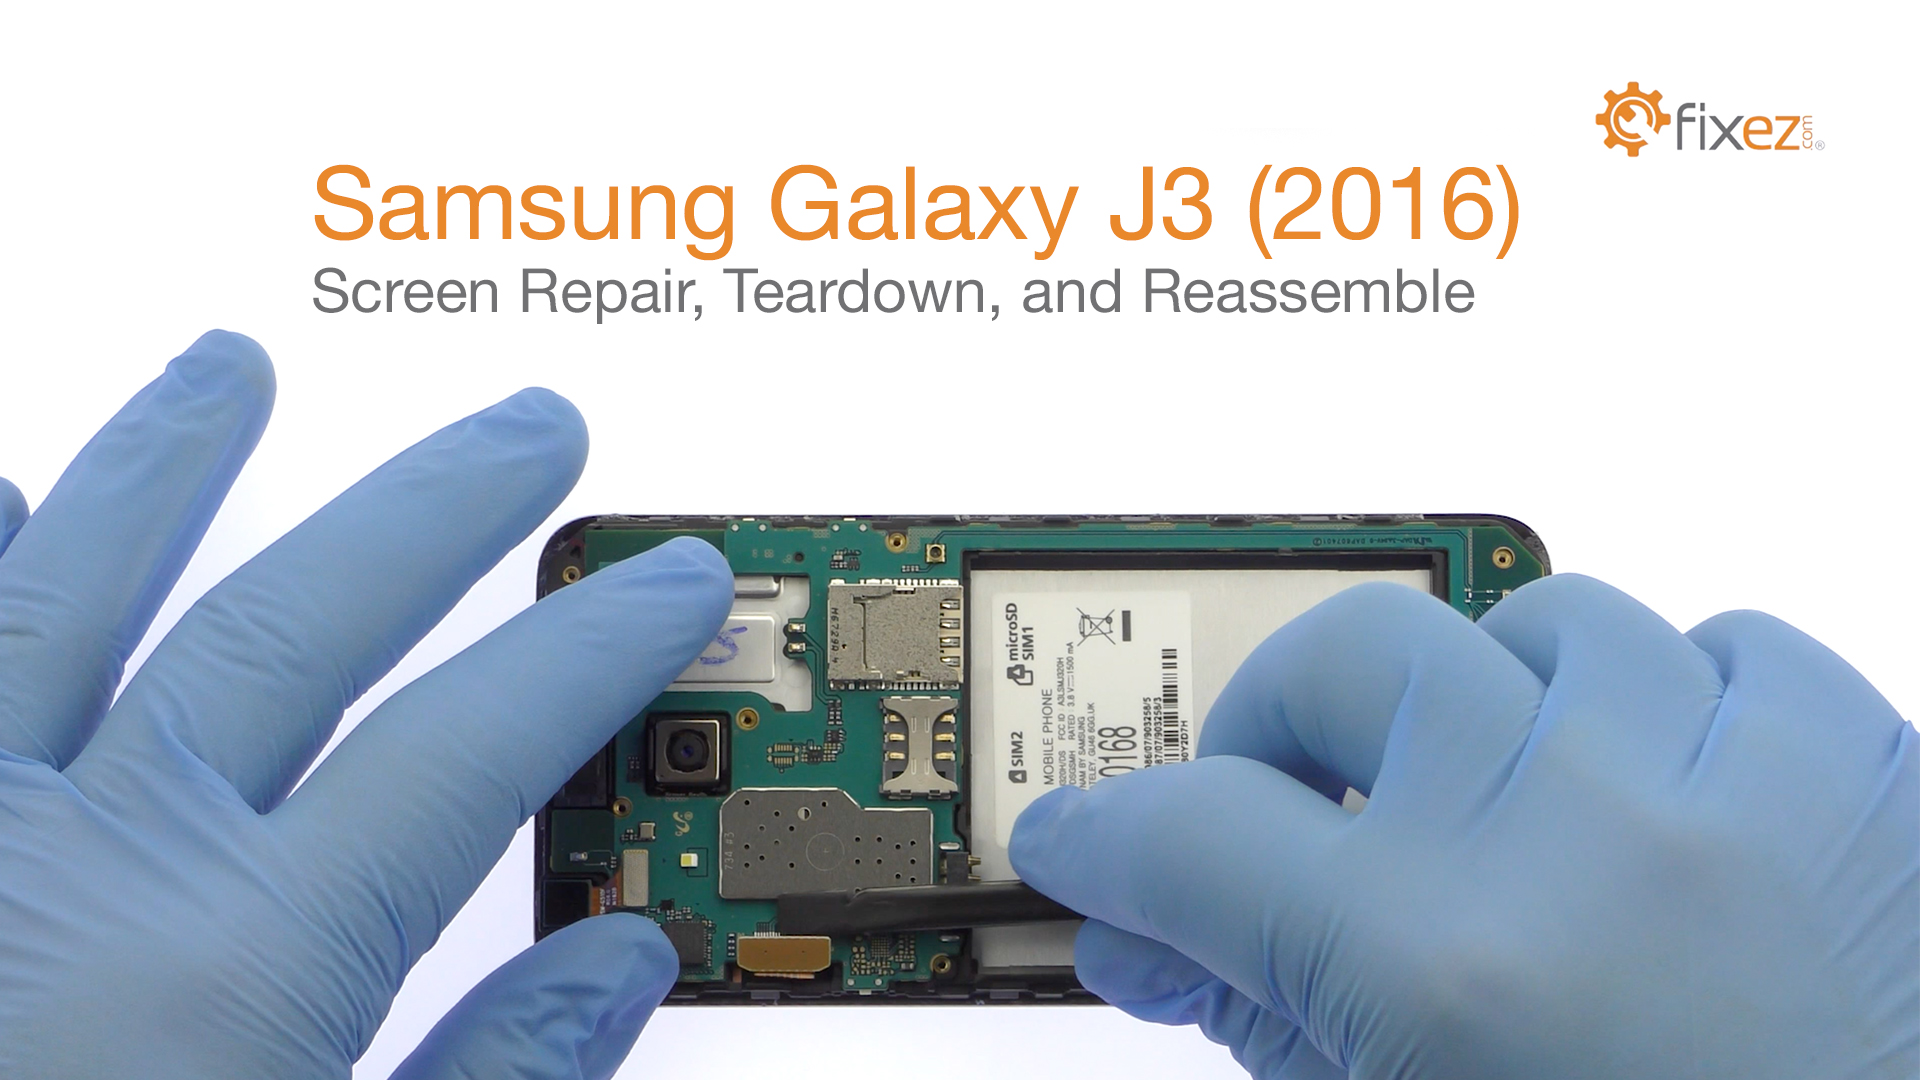 Samsung Galaxy J3 (2016) Screen Repair, Teardown and Reassemble